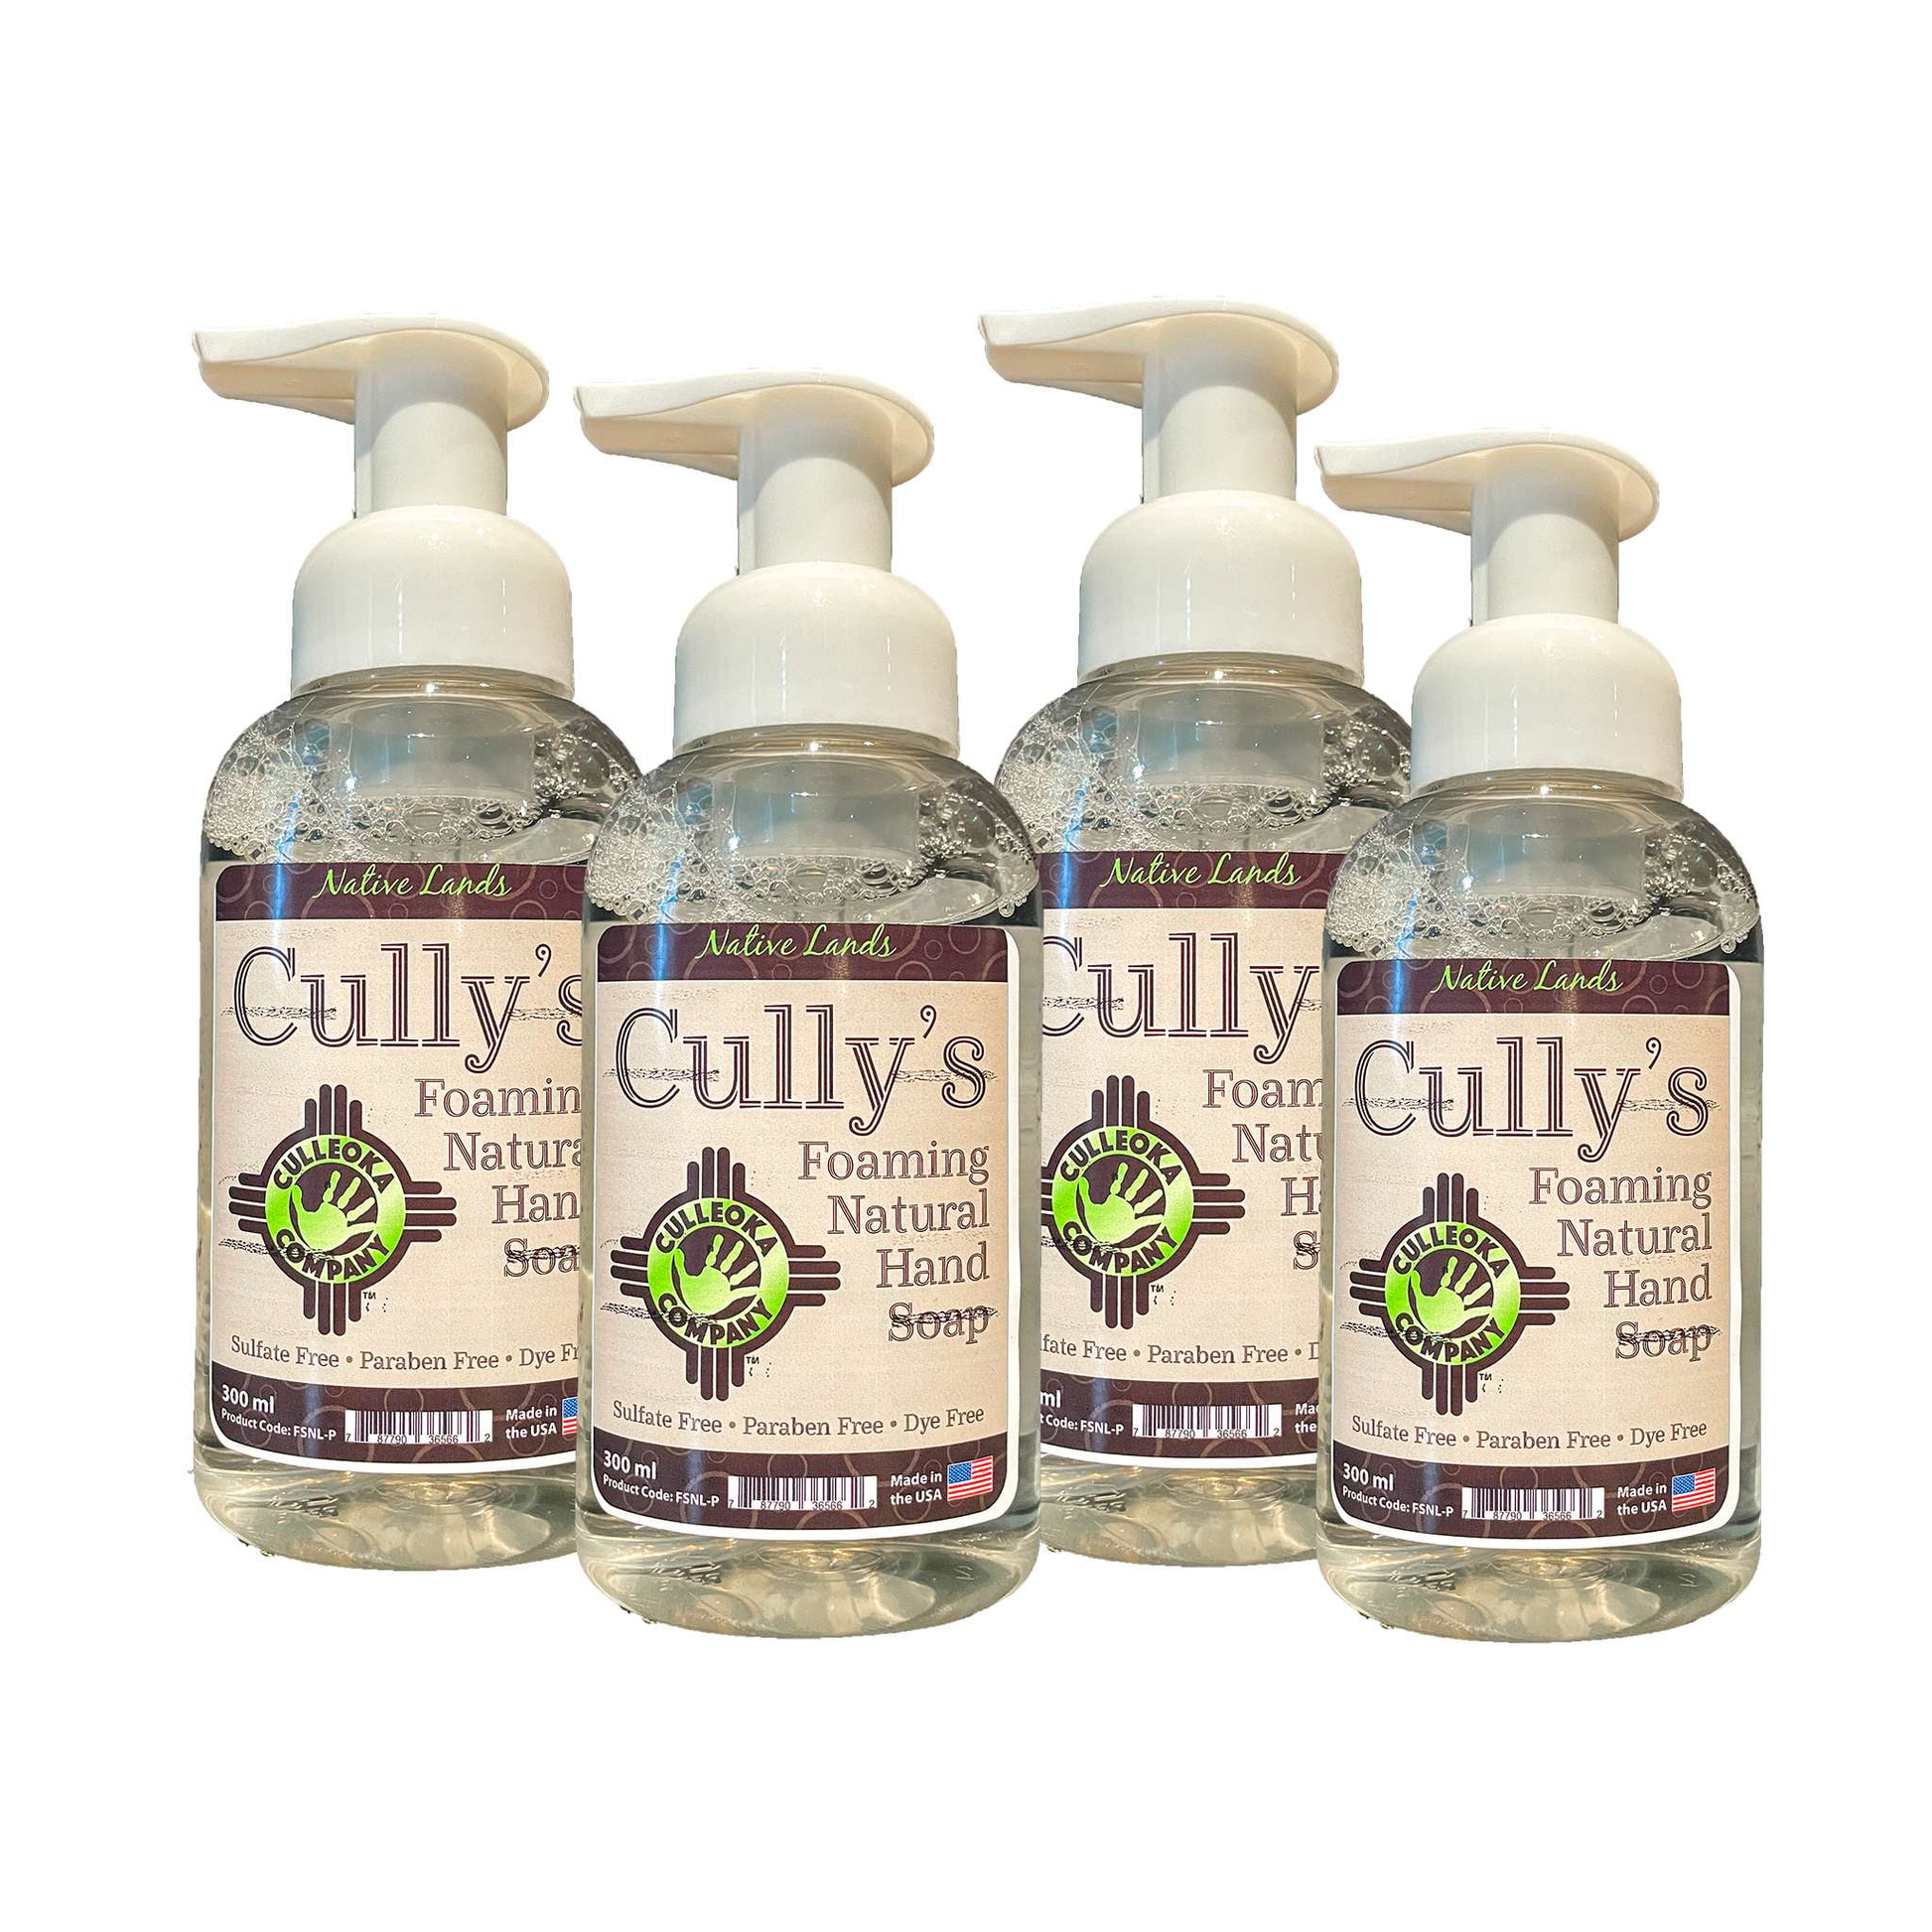 Cully's Foaming Natural Hand Soap - Culleoka Company LLC